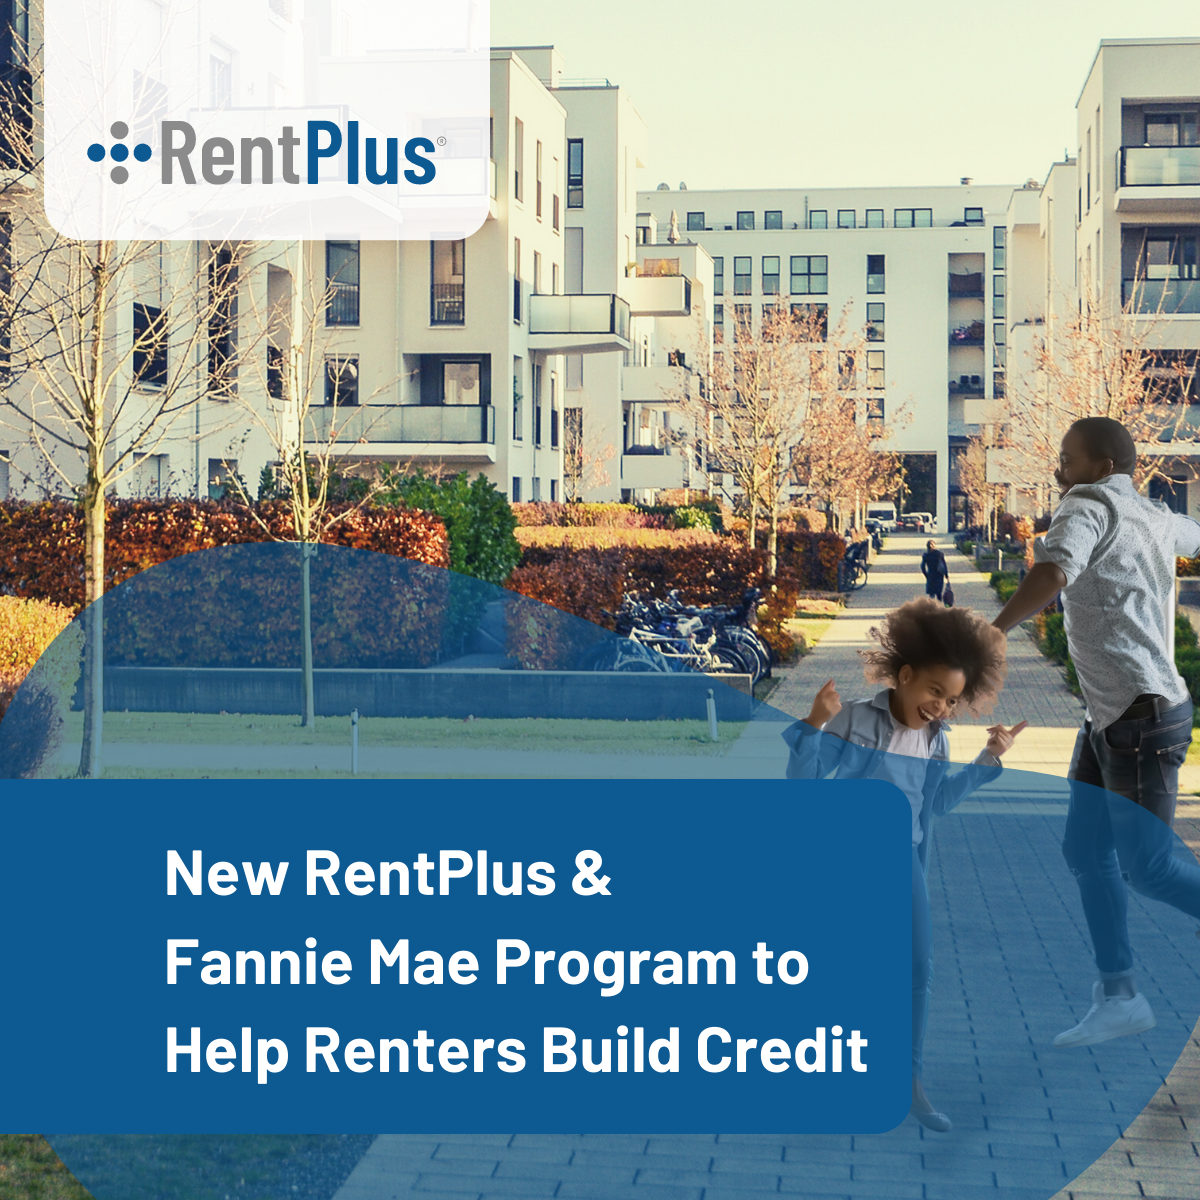 RentPlus and Fannie Mae Team Up